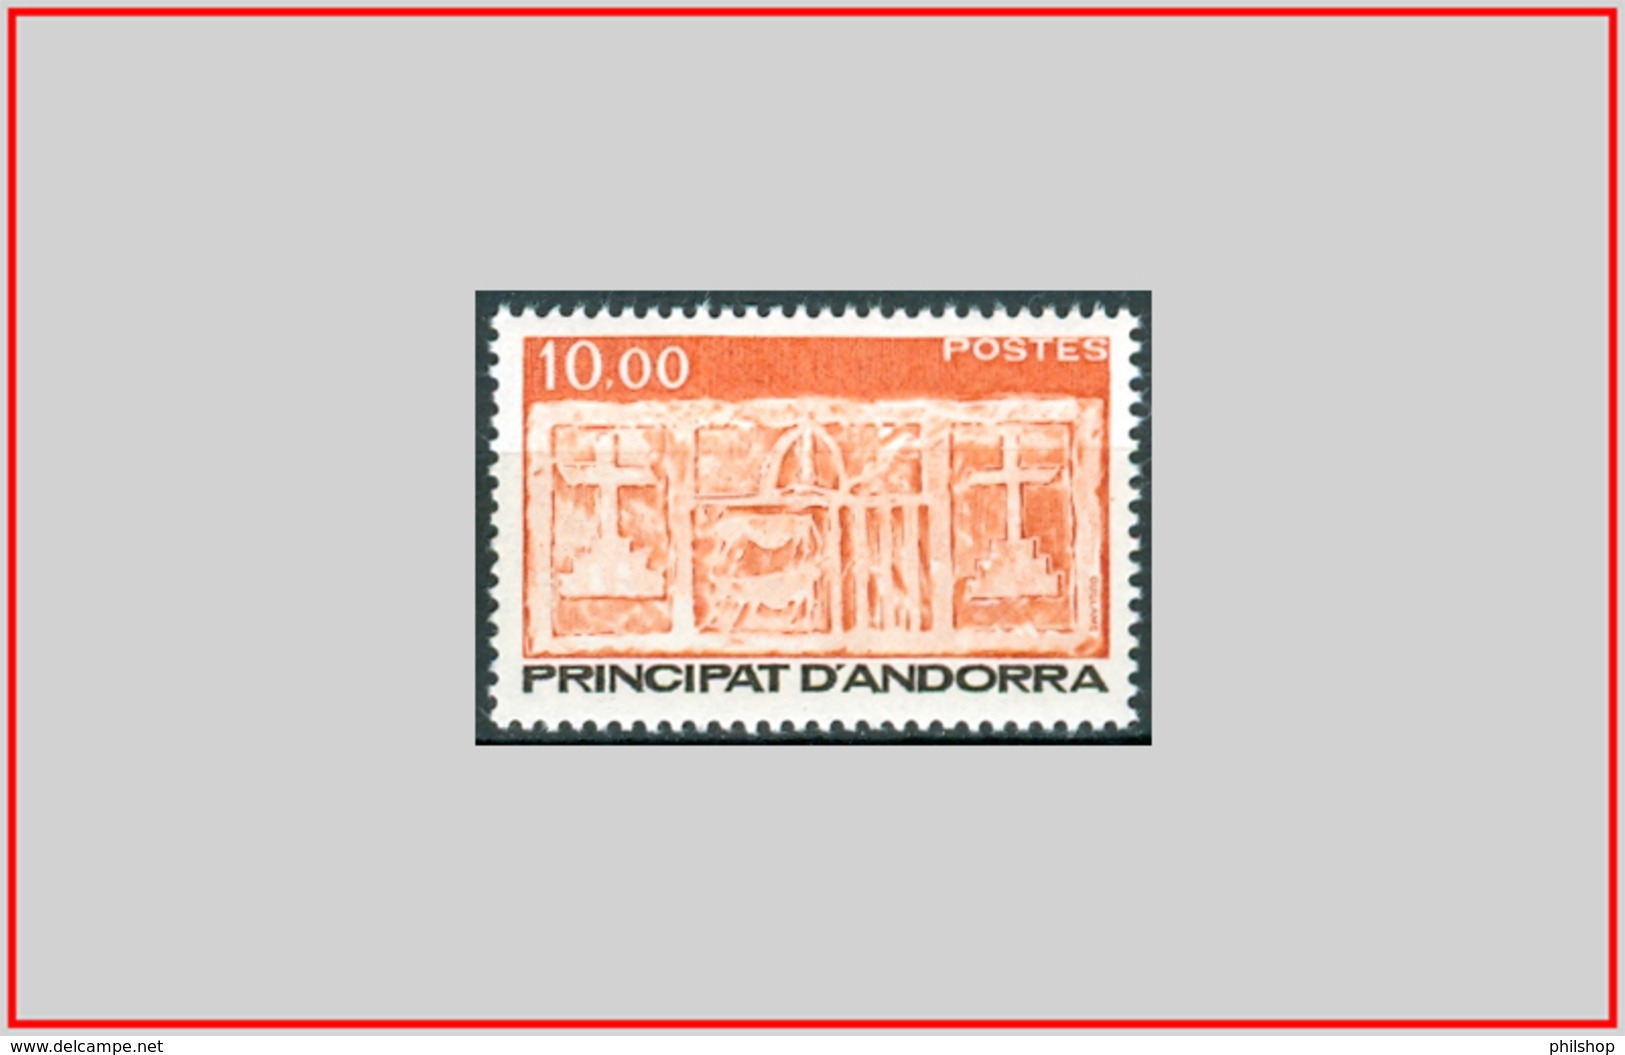 Andorra FR 1985 - Cat. 337 (MNH **) Primo Stemma Di Andorra - First Coat Of Arms Of Andorra (000595) - Nuovi